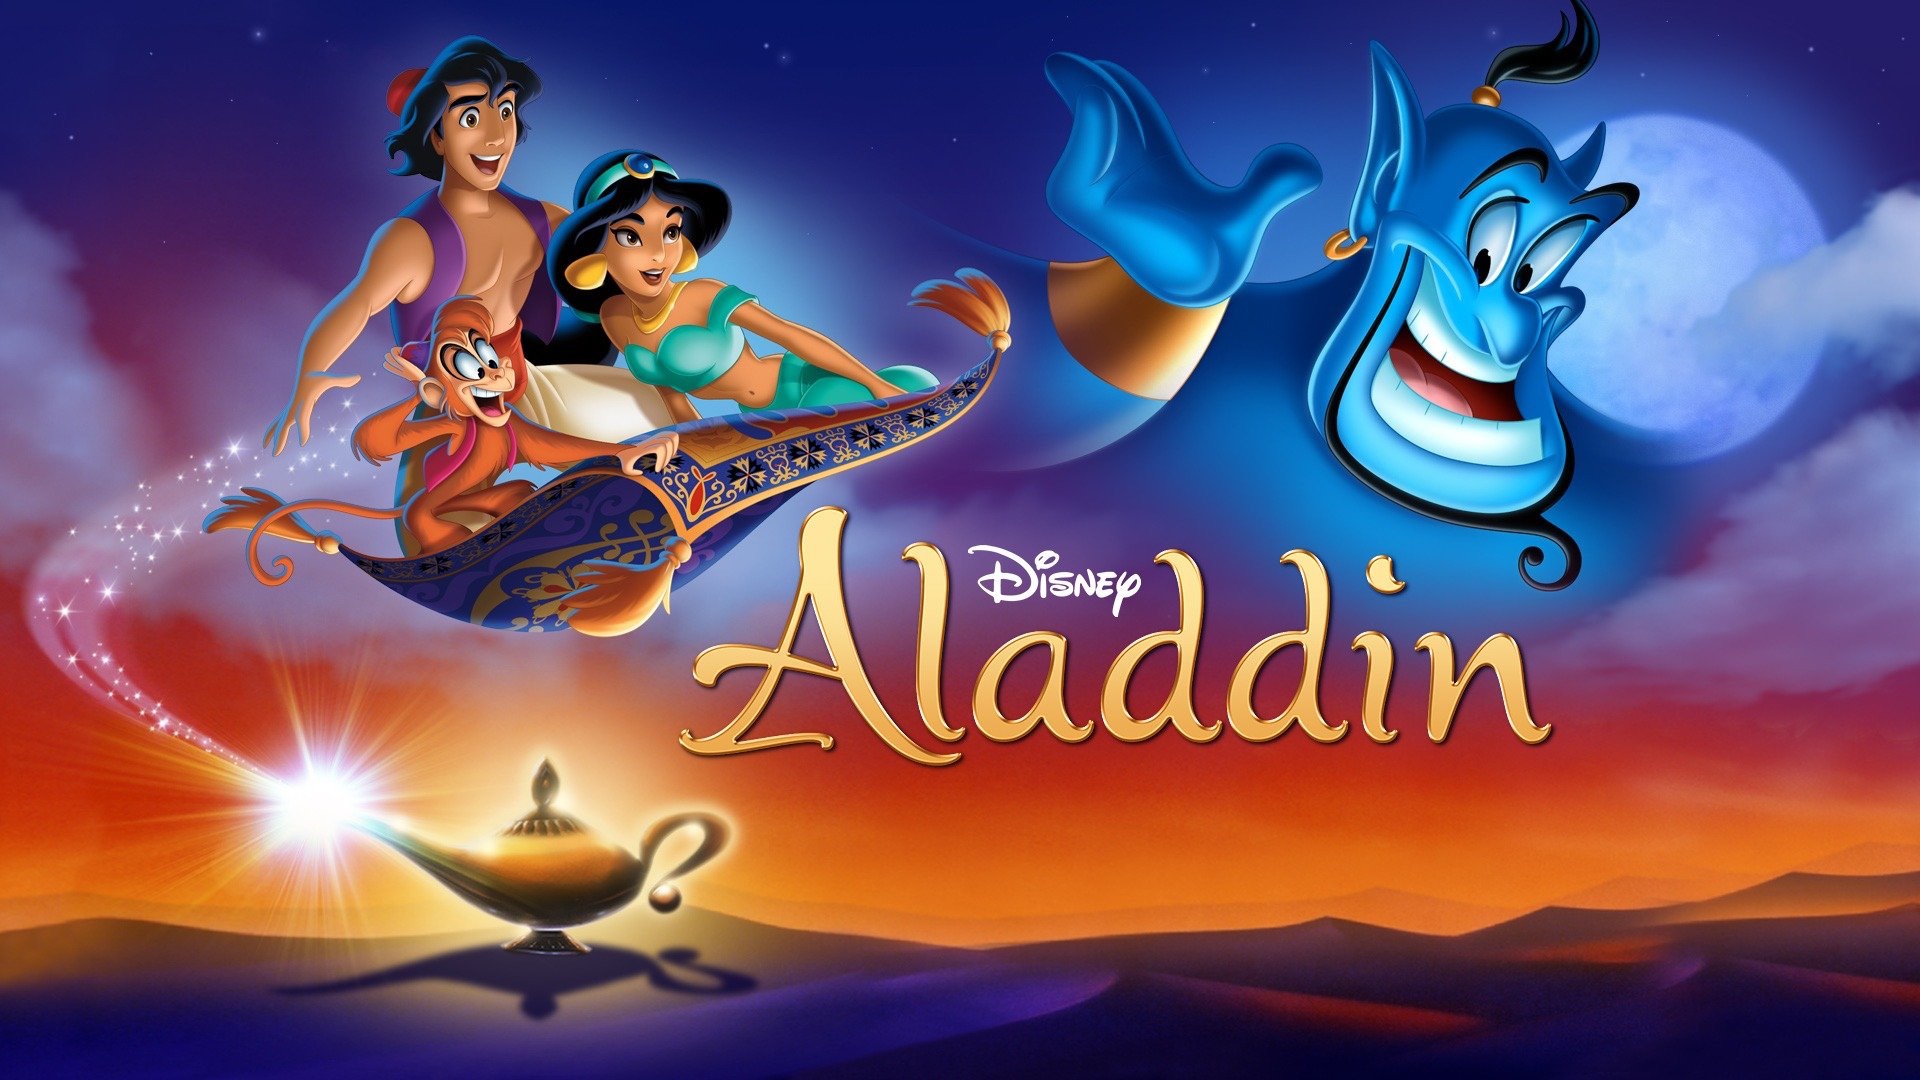 Aladdin download the last version for apple